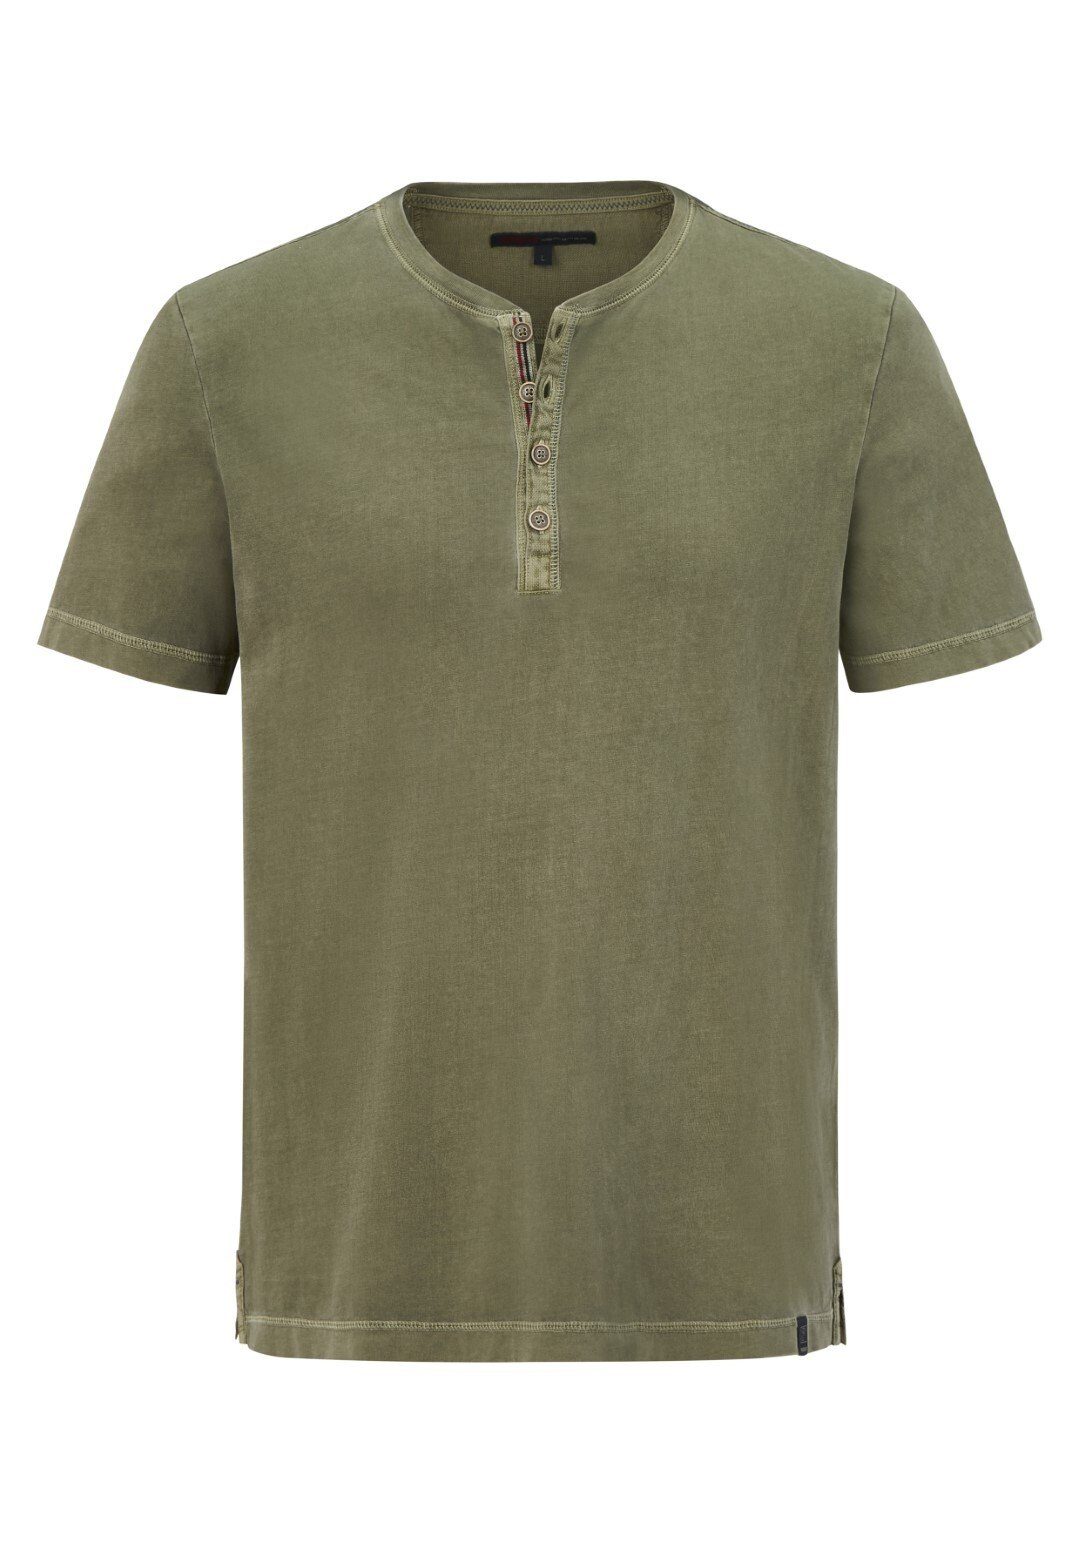 Paddock's Kurzarmshirt Henley Baumwolle dusty olive aus Shirt